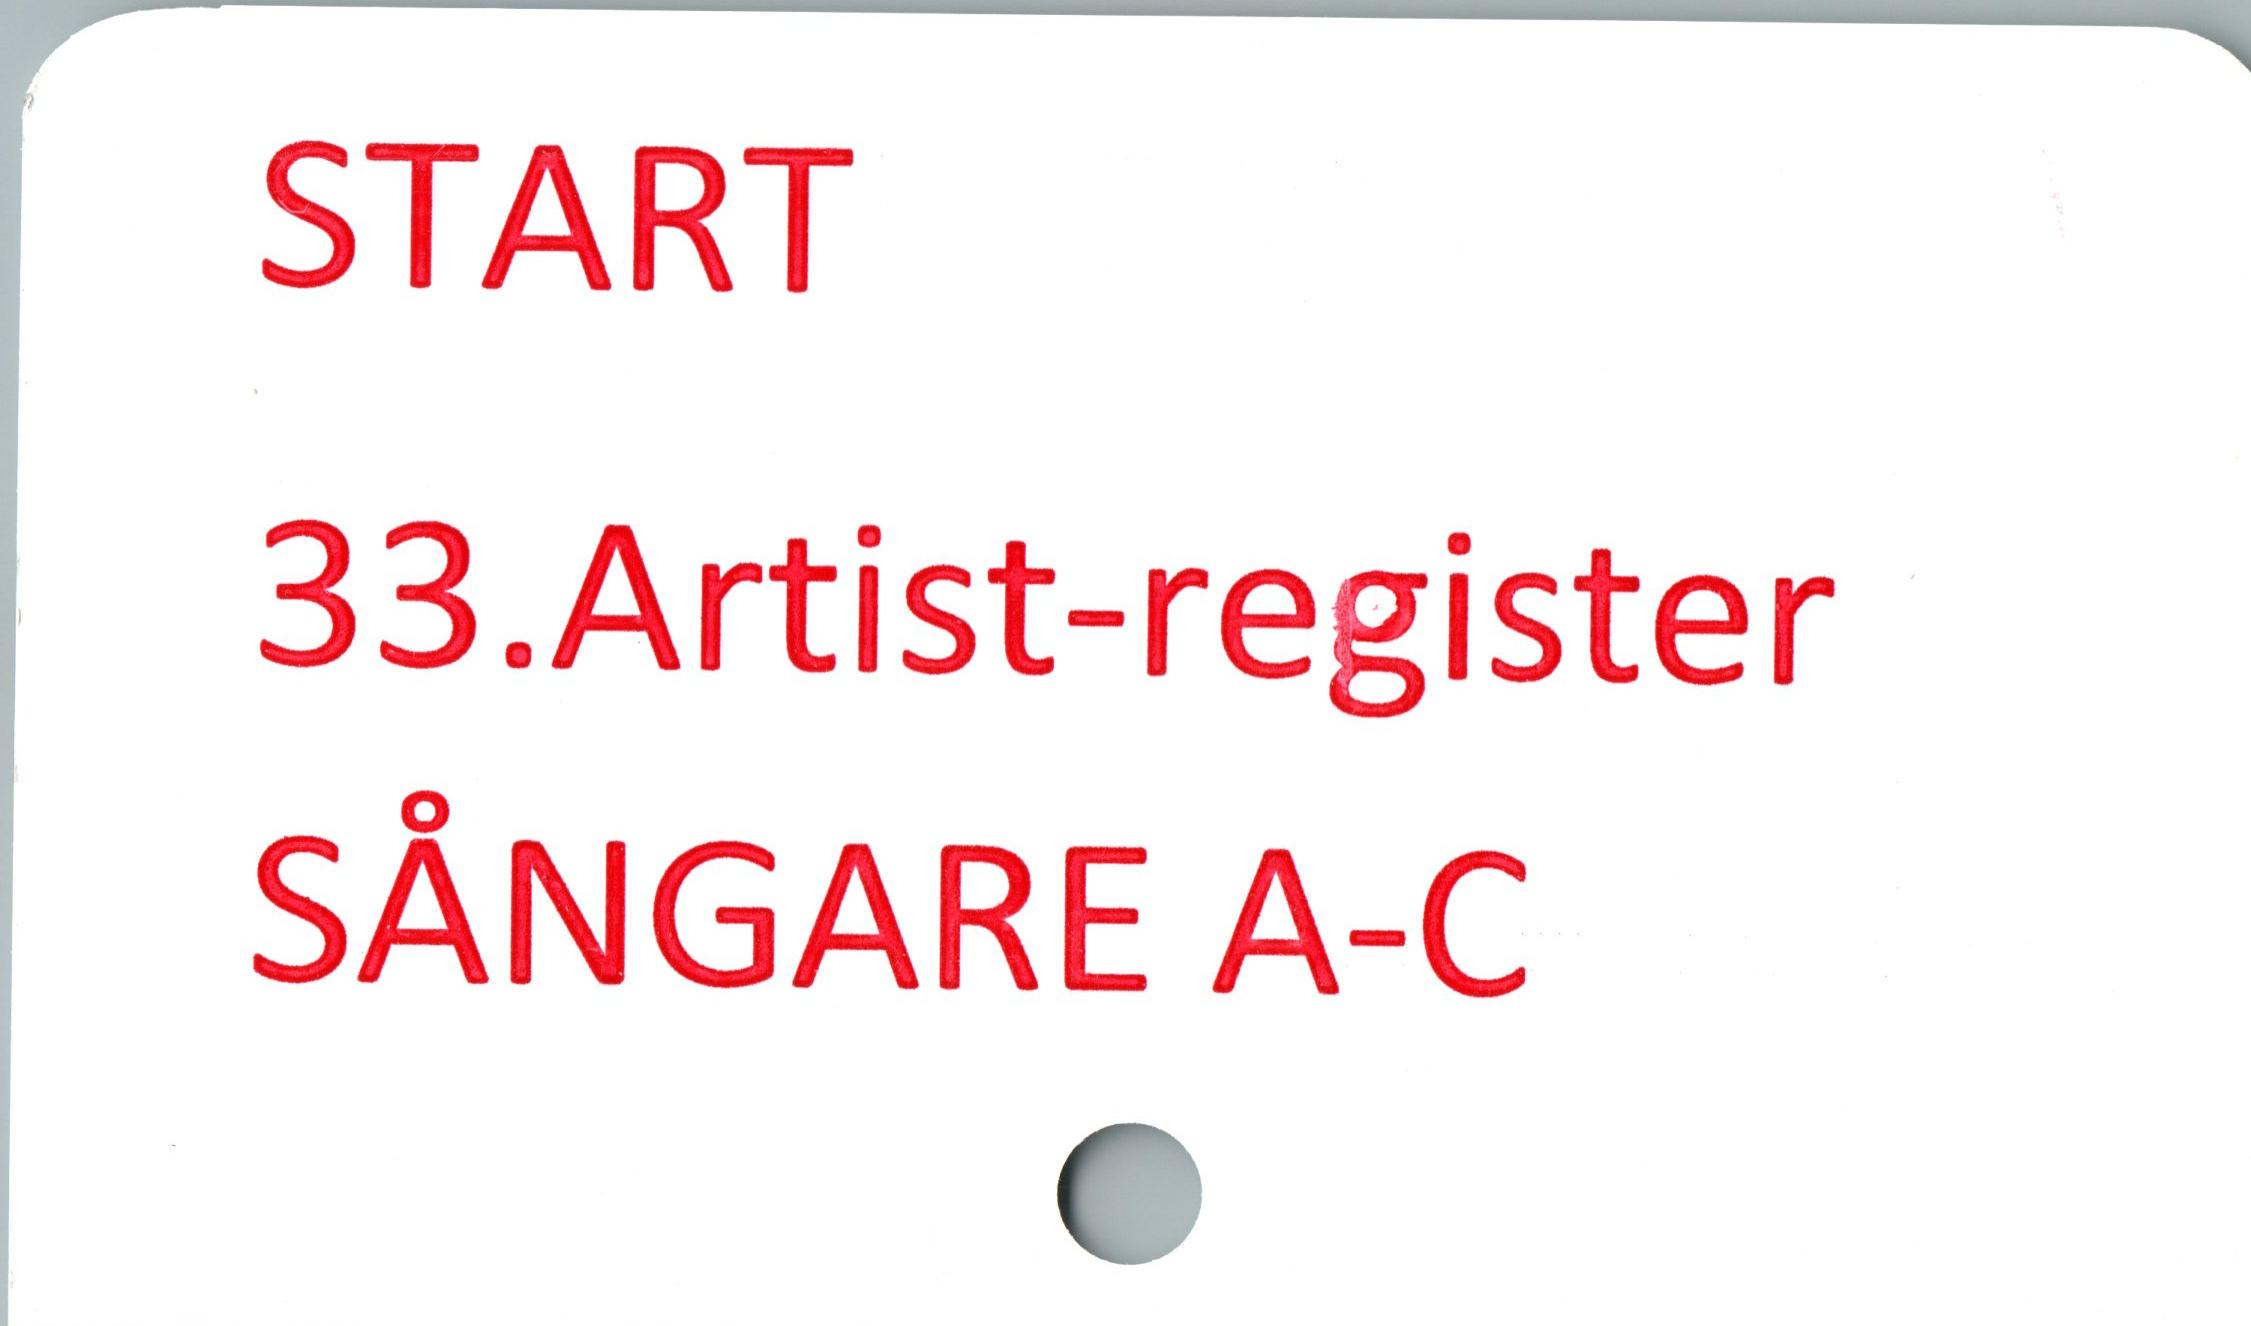  ﻿START
33.Artist-register SÅNGARE A-C